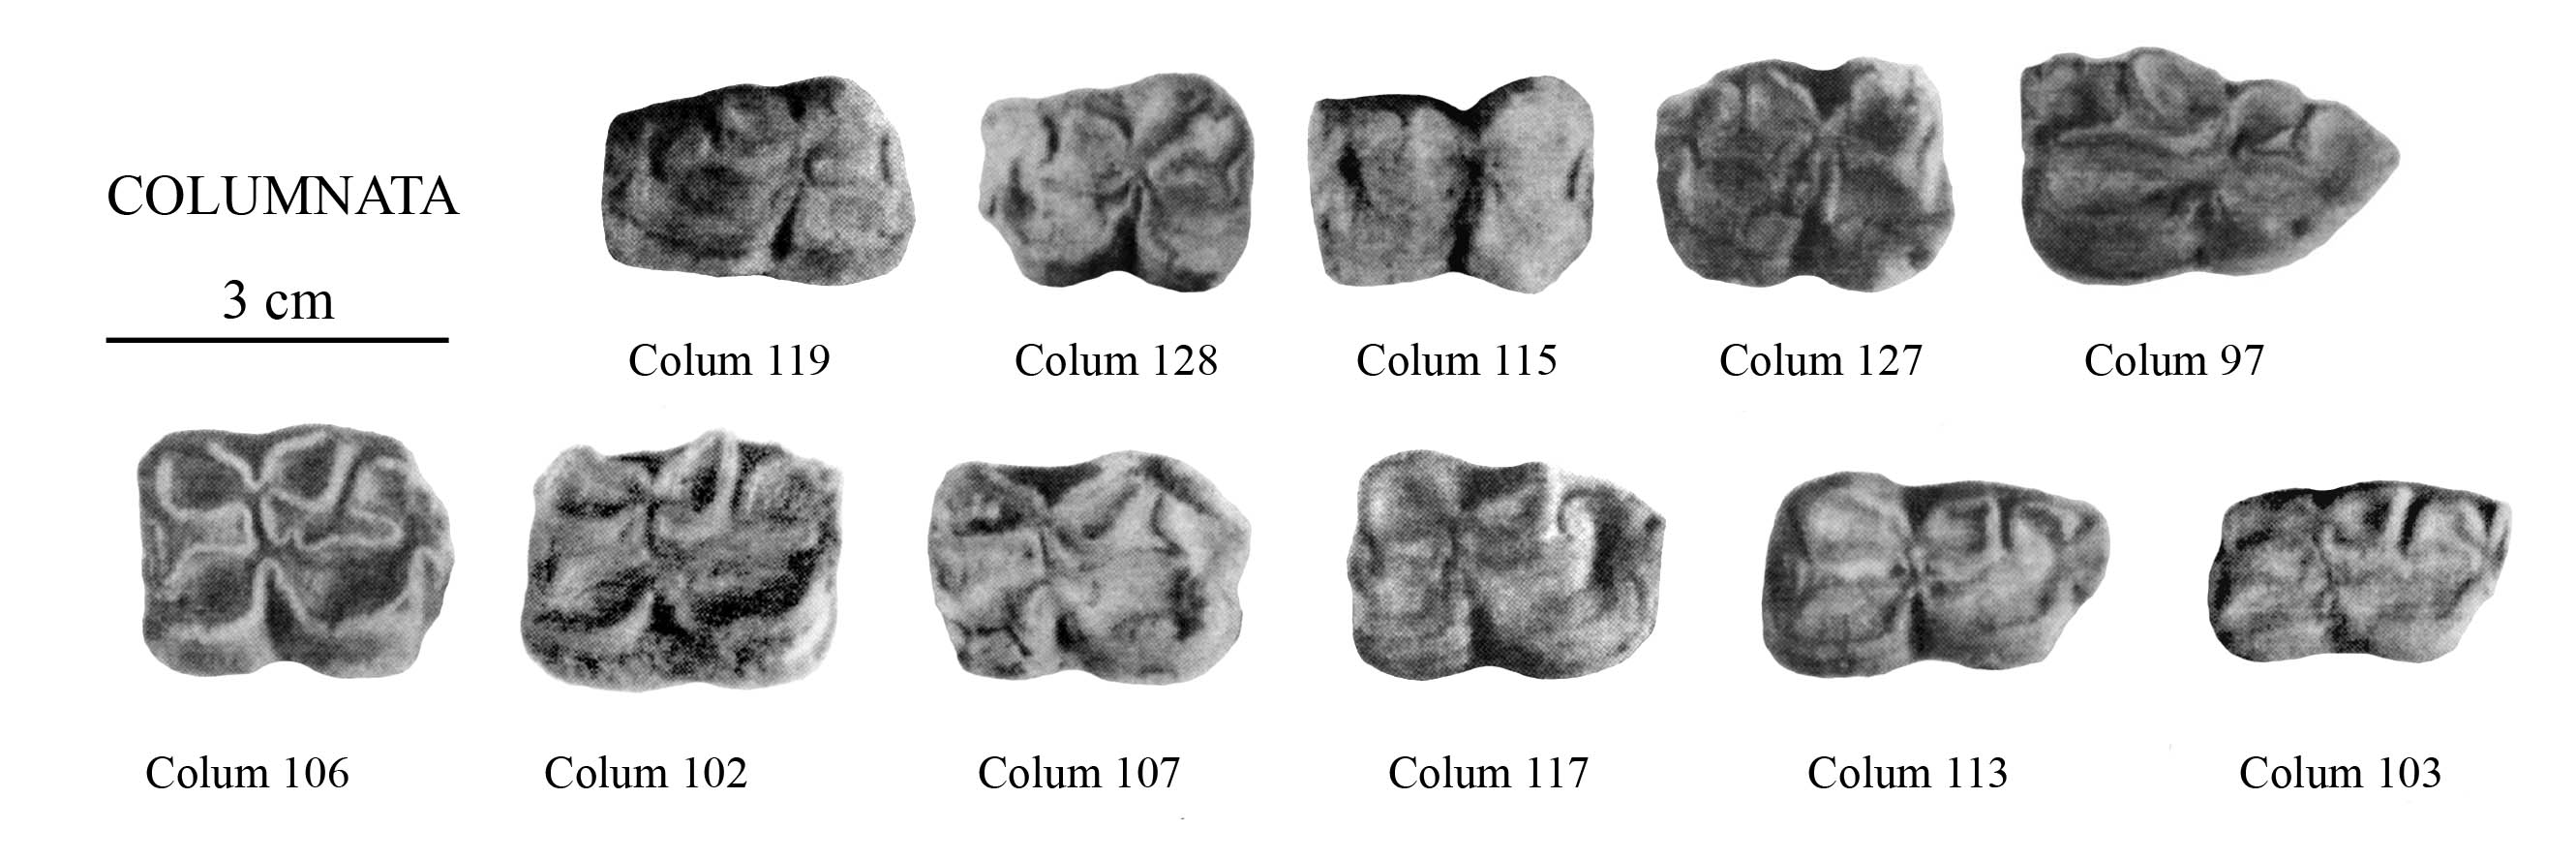 Columnata, Lower cheek teeth